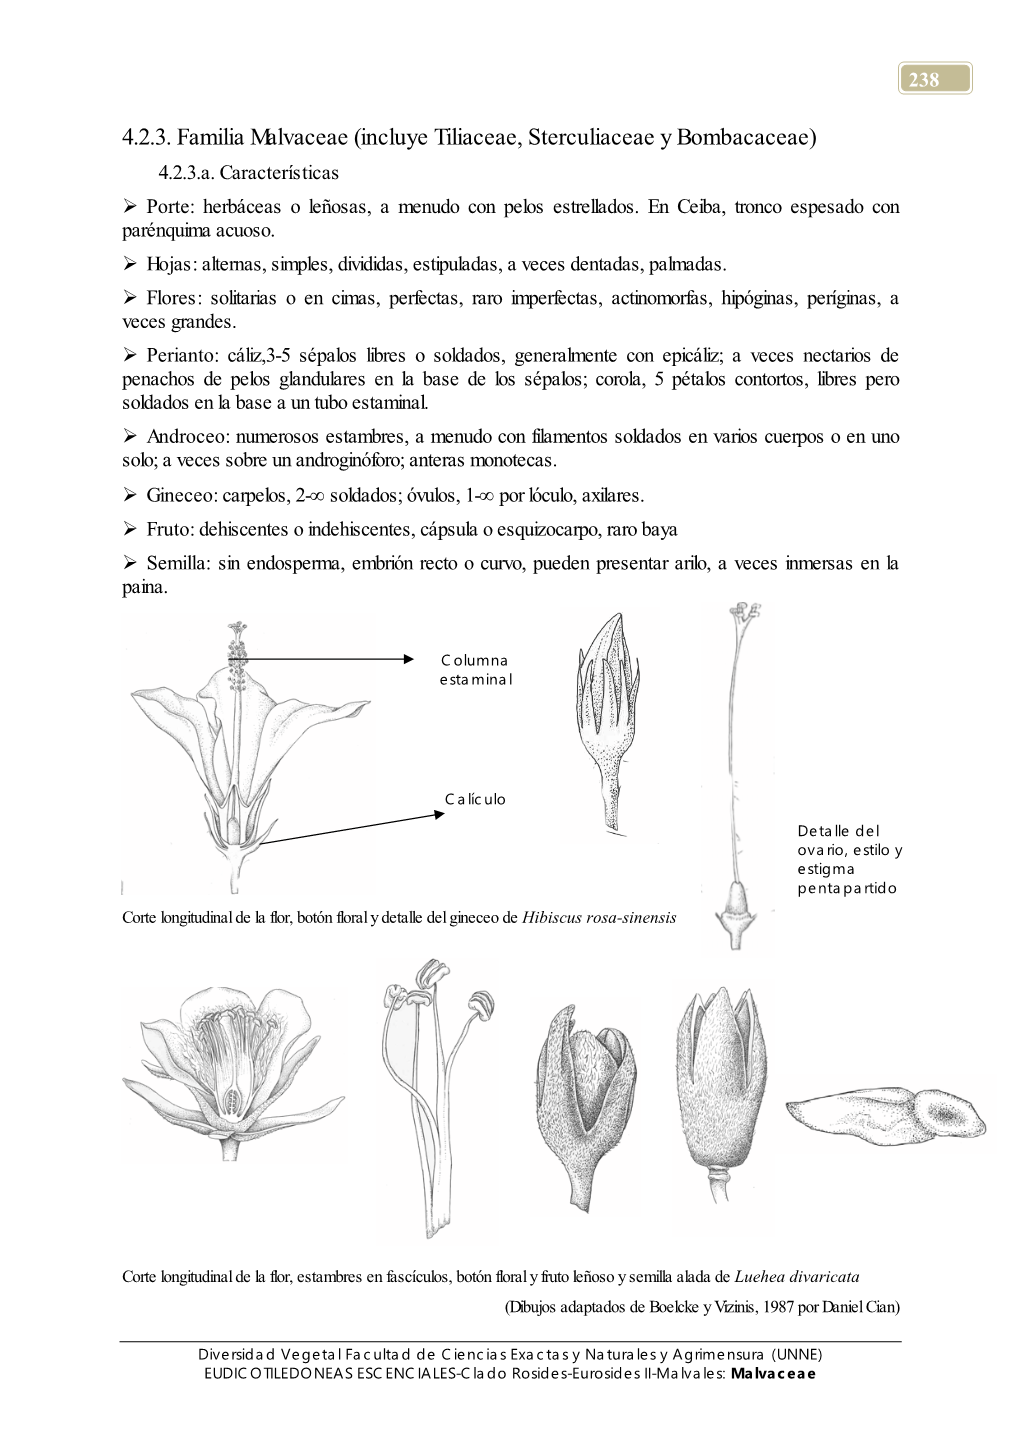 4.2.3. Familia Malvaceae (Incluye Tiliaceae, Sterculiaceae Y Bombacaceae) 4.2.3.A